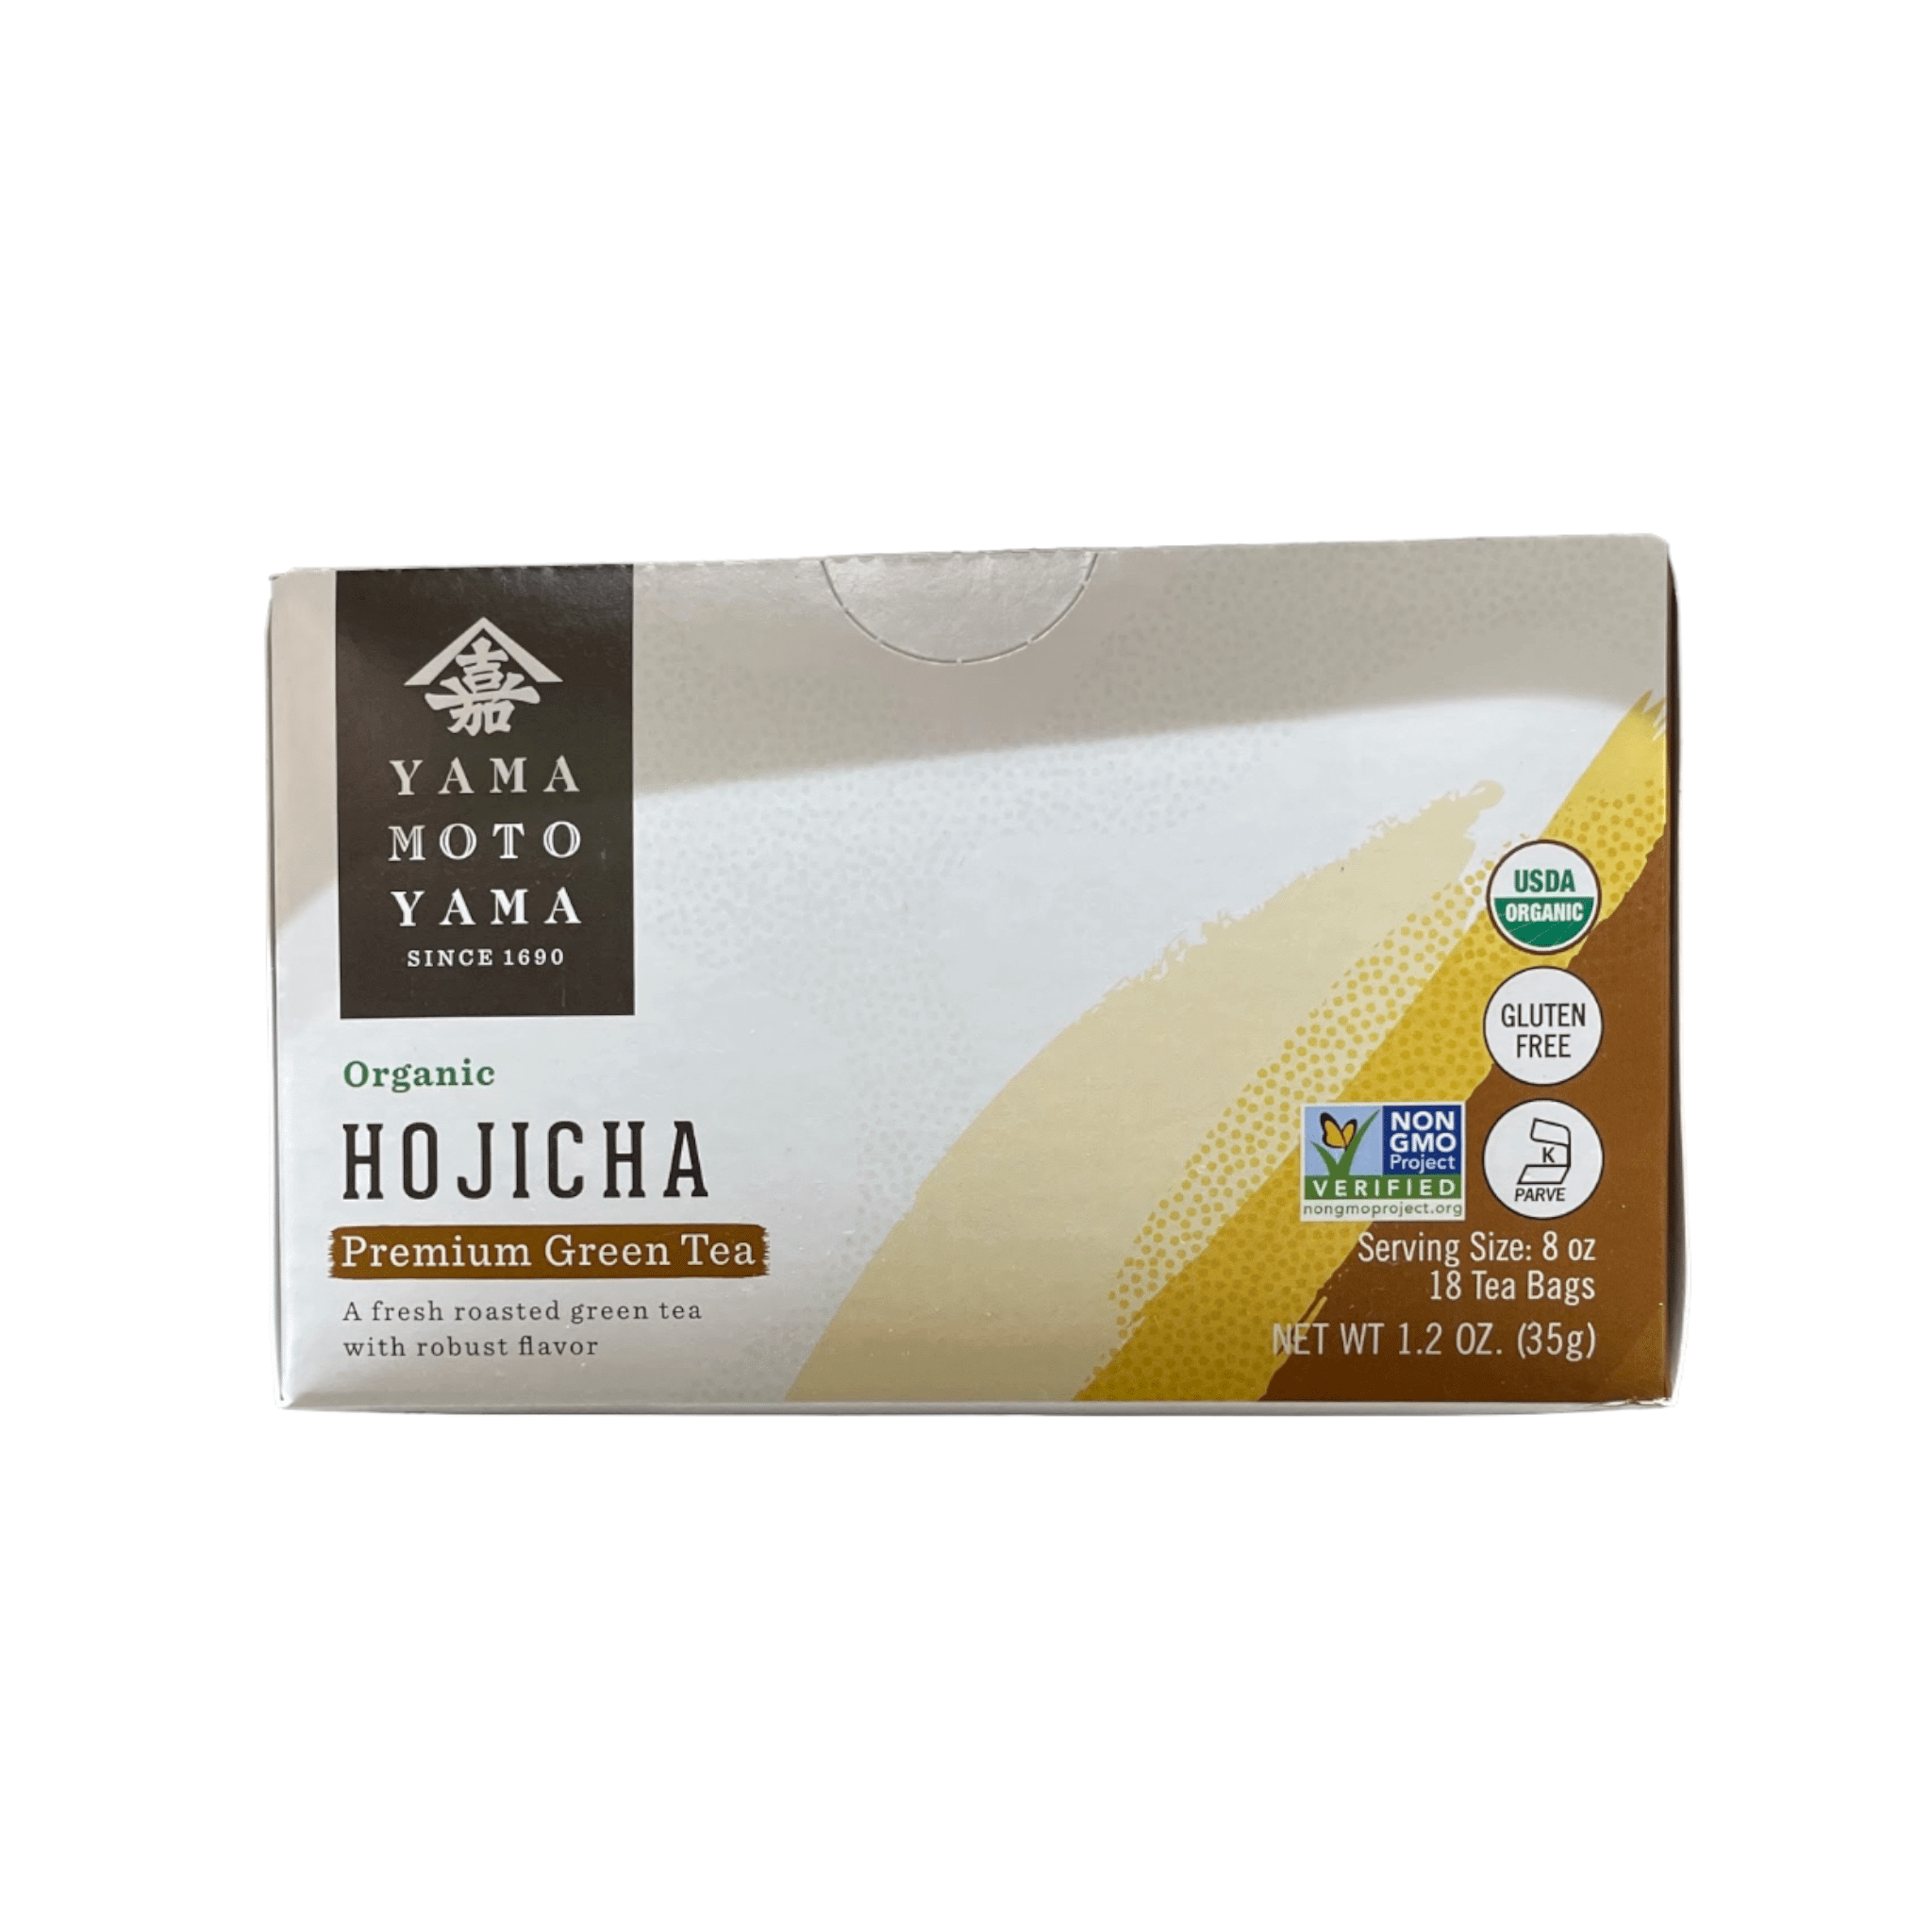 Yamamotoyama Organic Hojicha Premium Green Tea